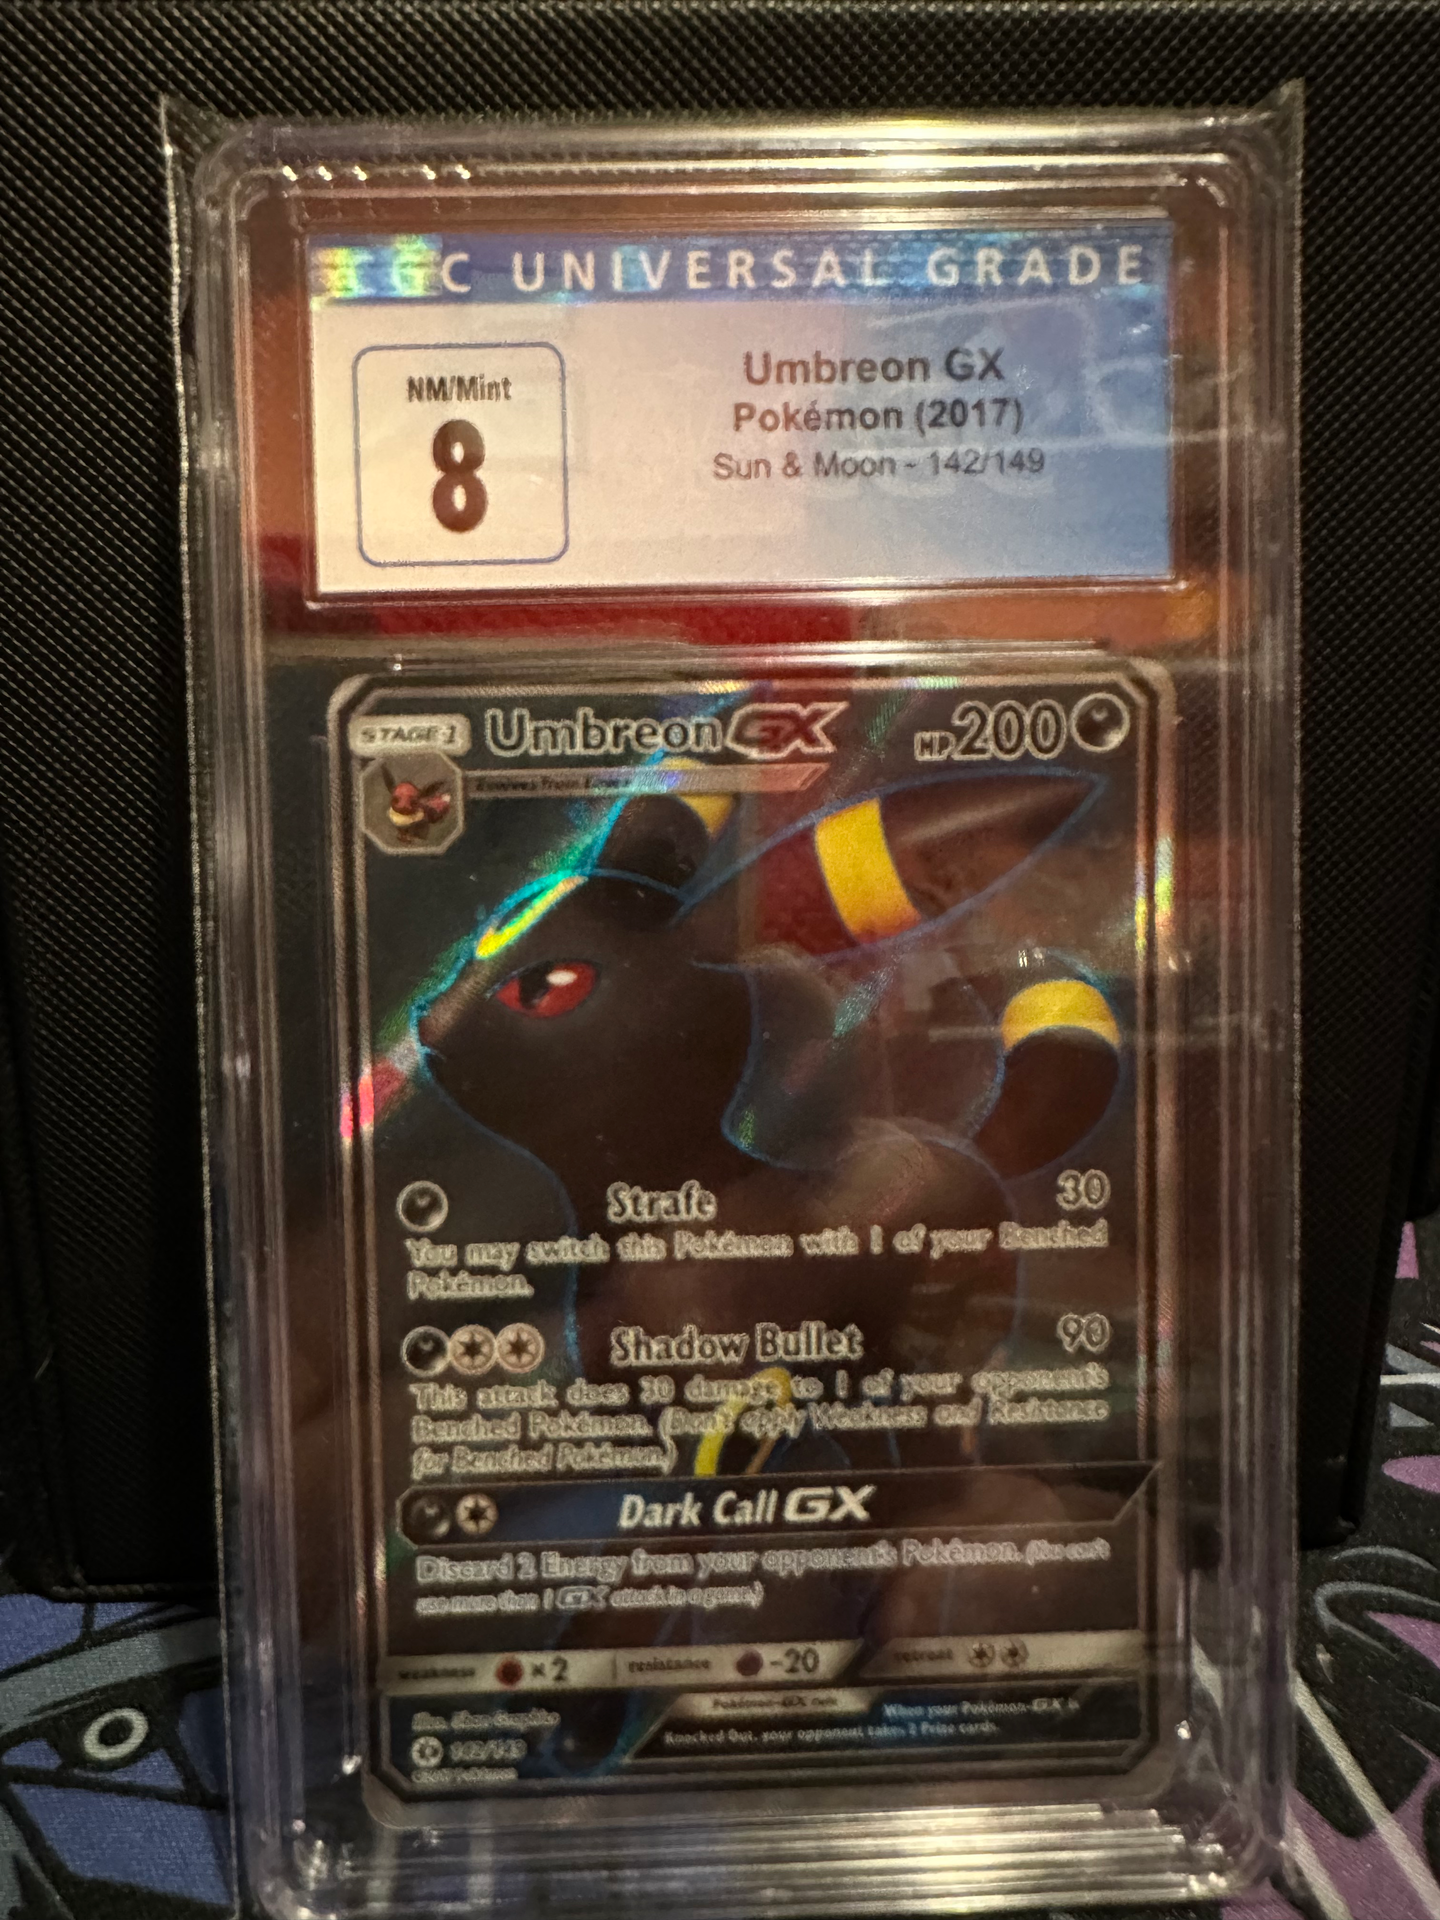 CGC 8 Umbreon GX Full Art (Graded Card)